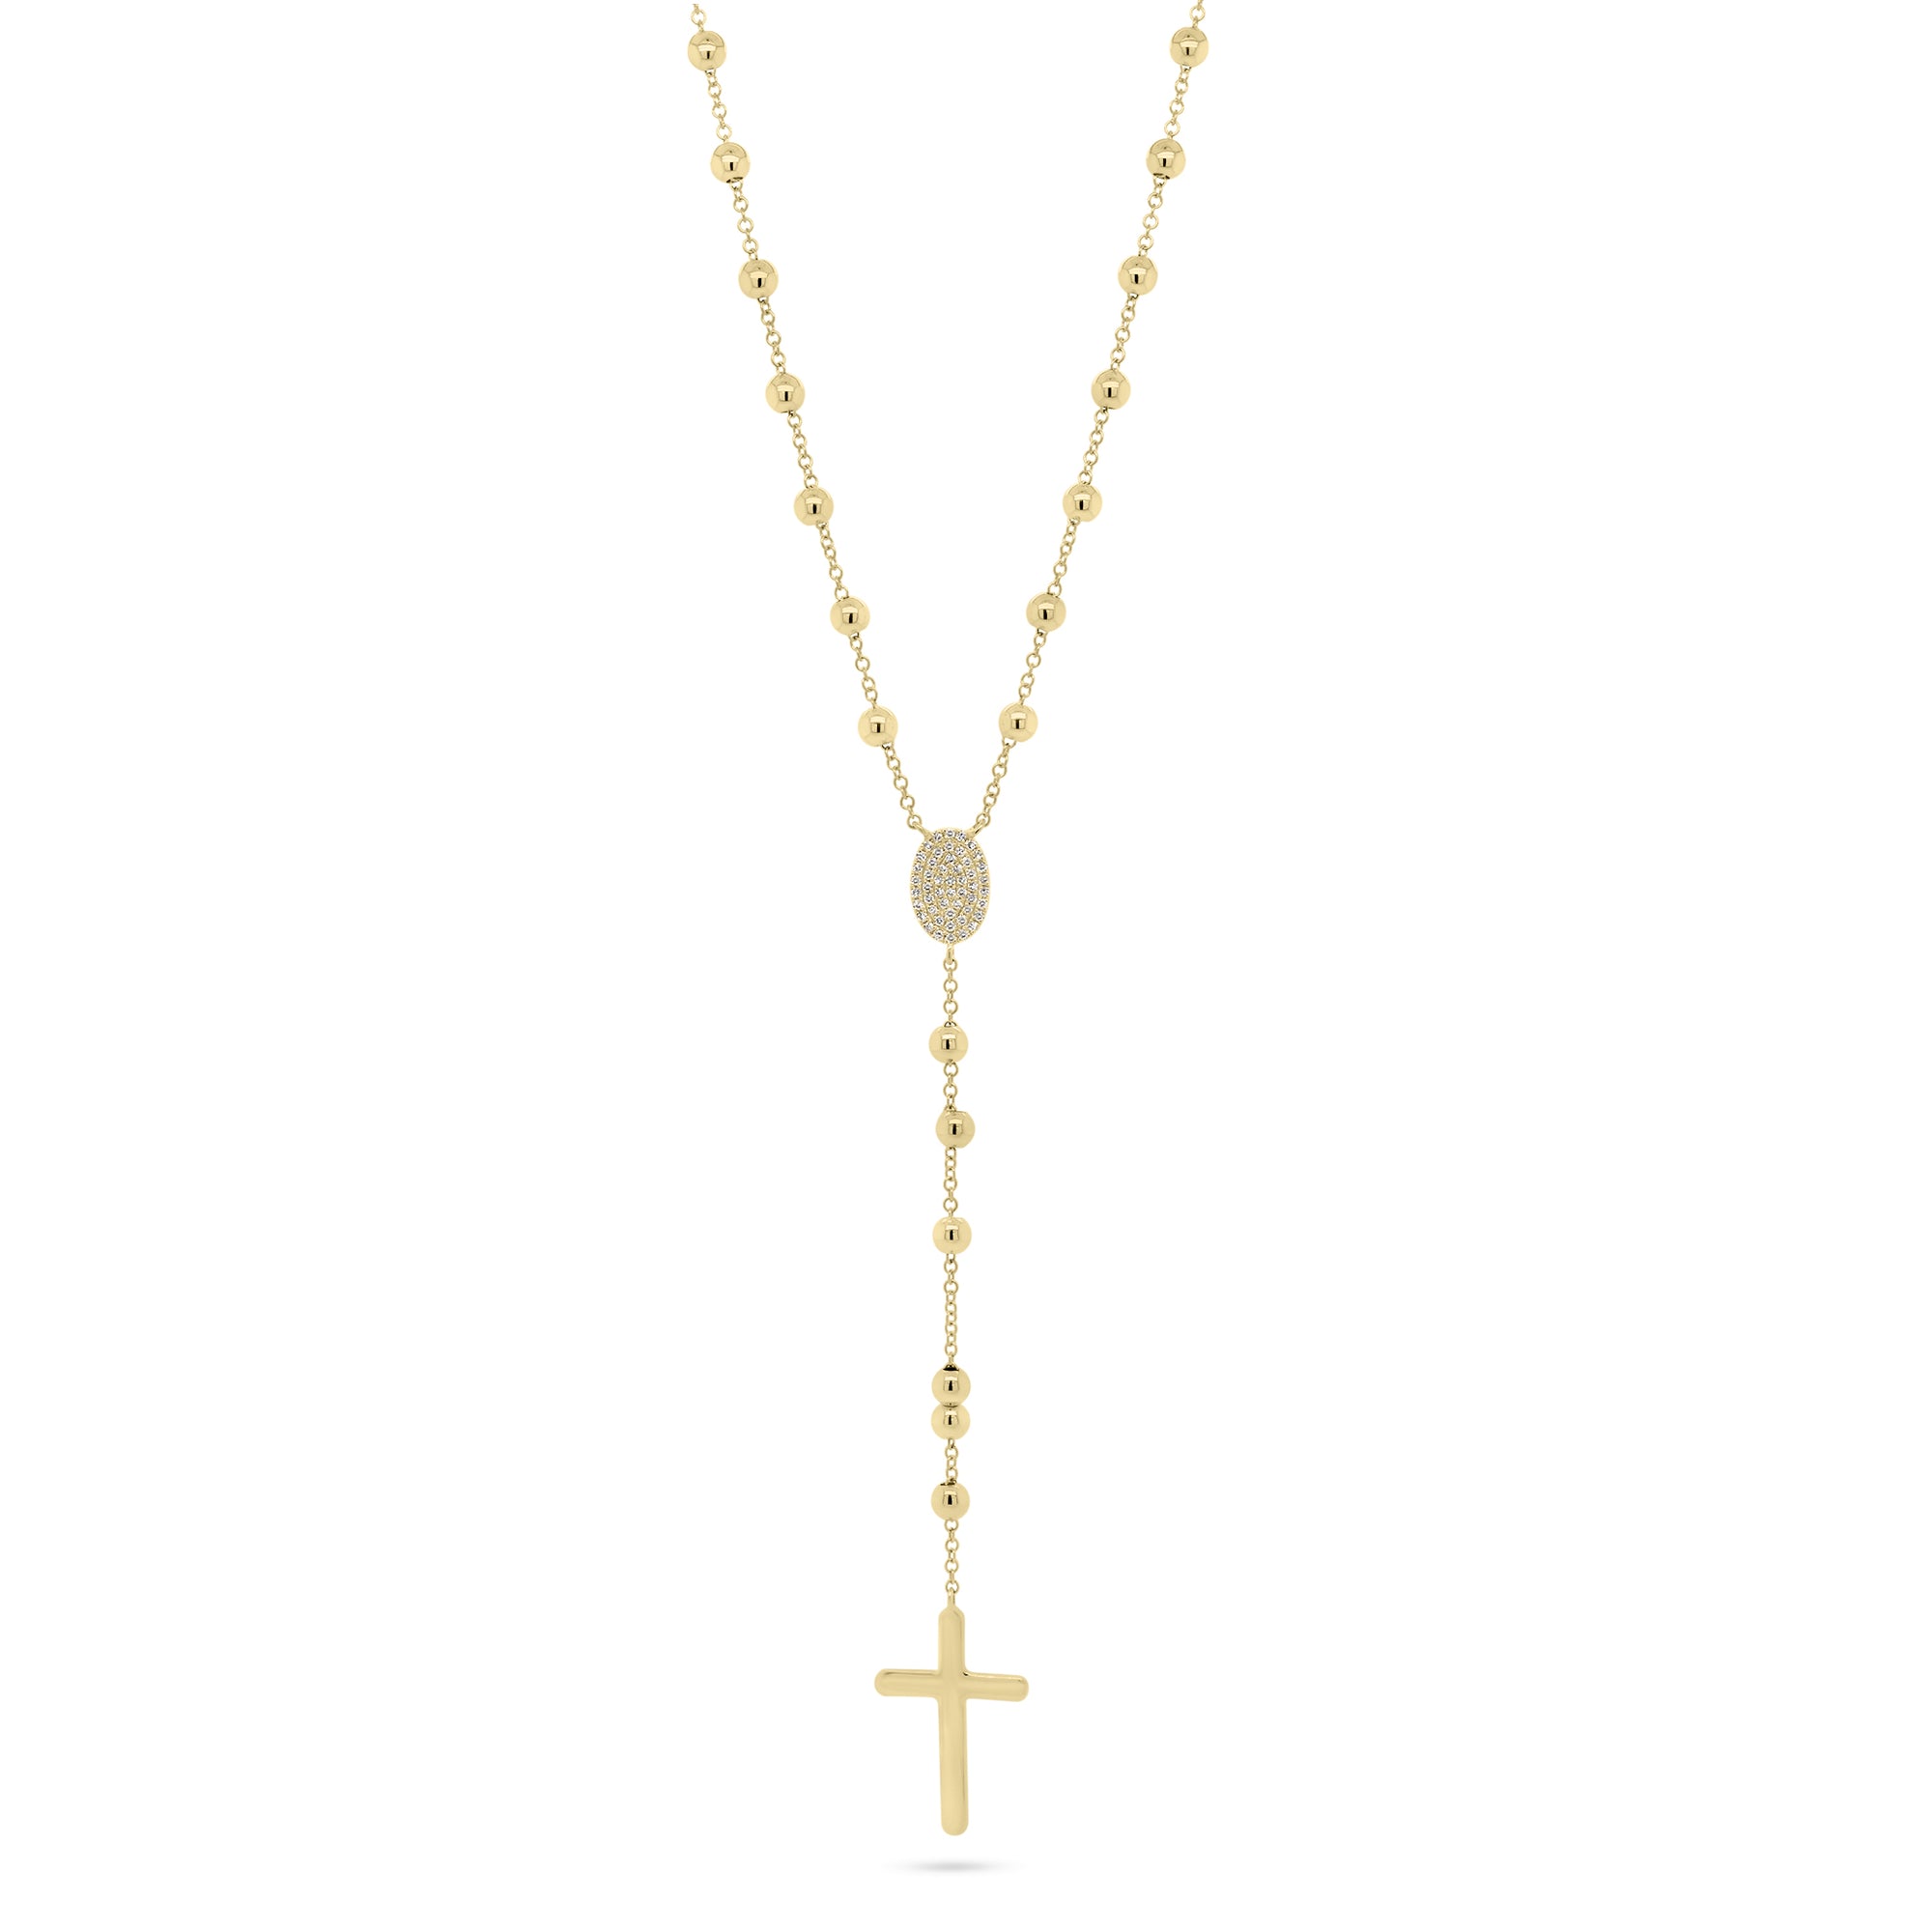 Diamond & Gold Rosary Necklace  - 14K gold  - diamonds totaling 0.11 carats